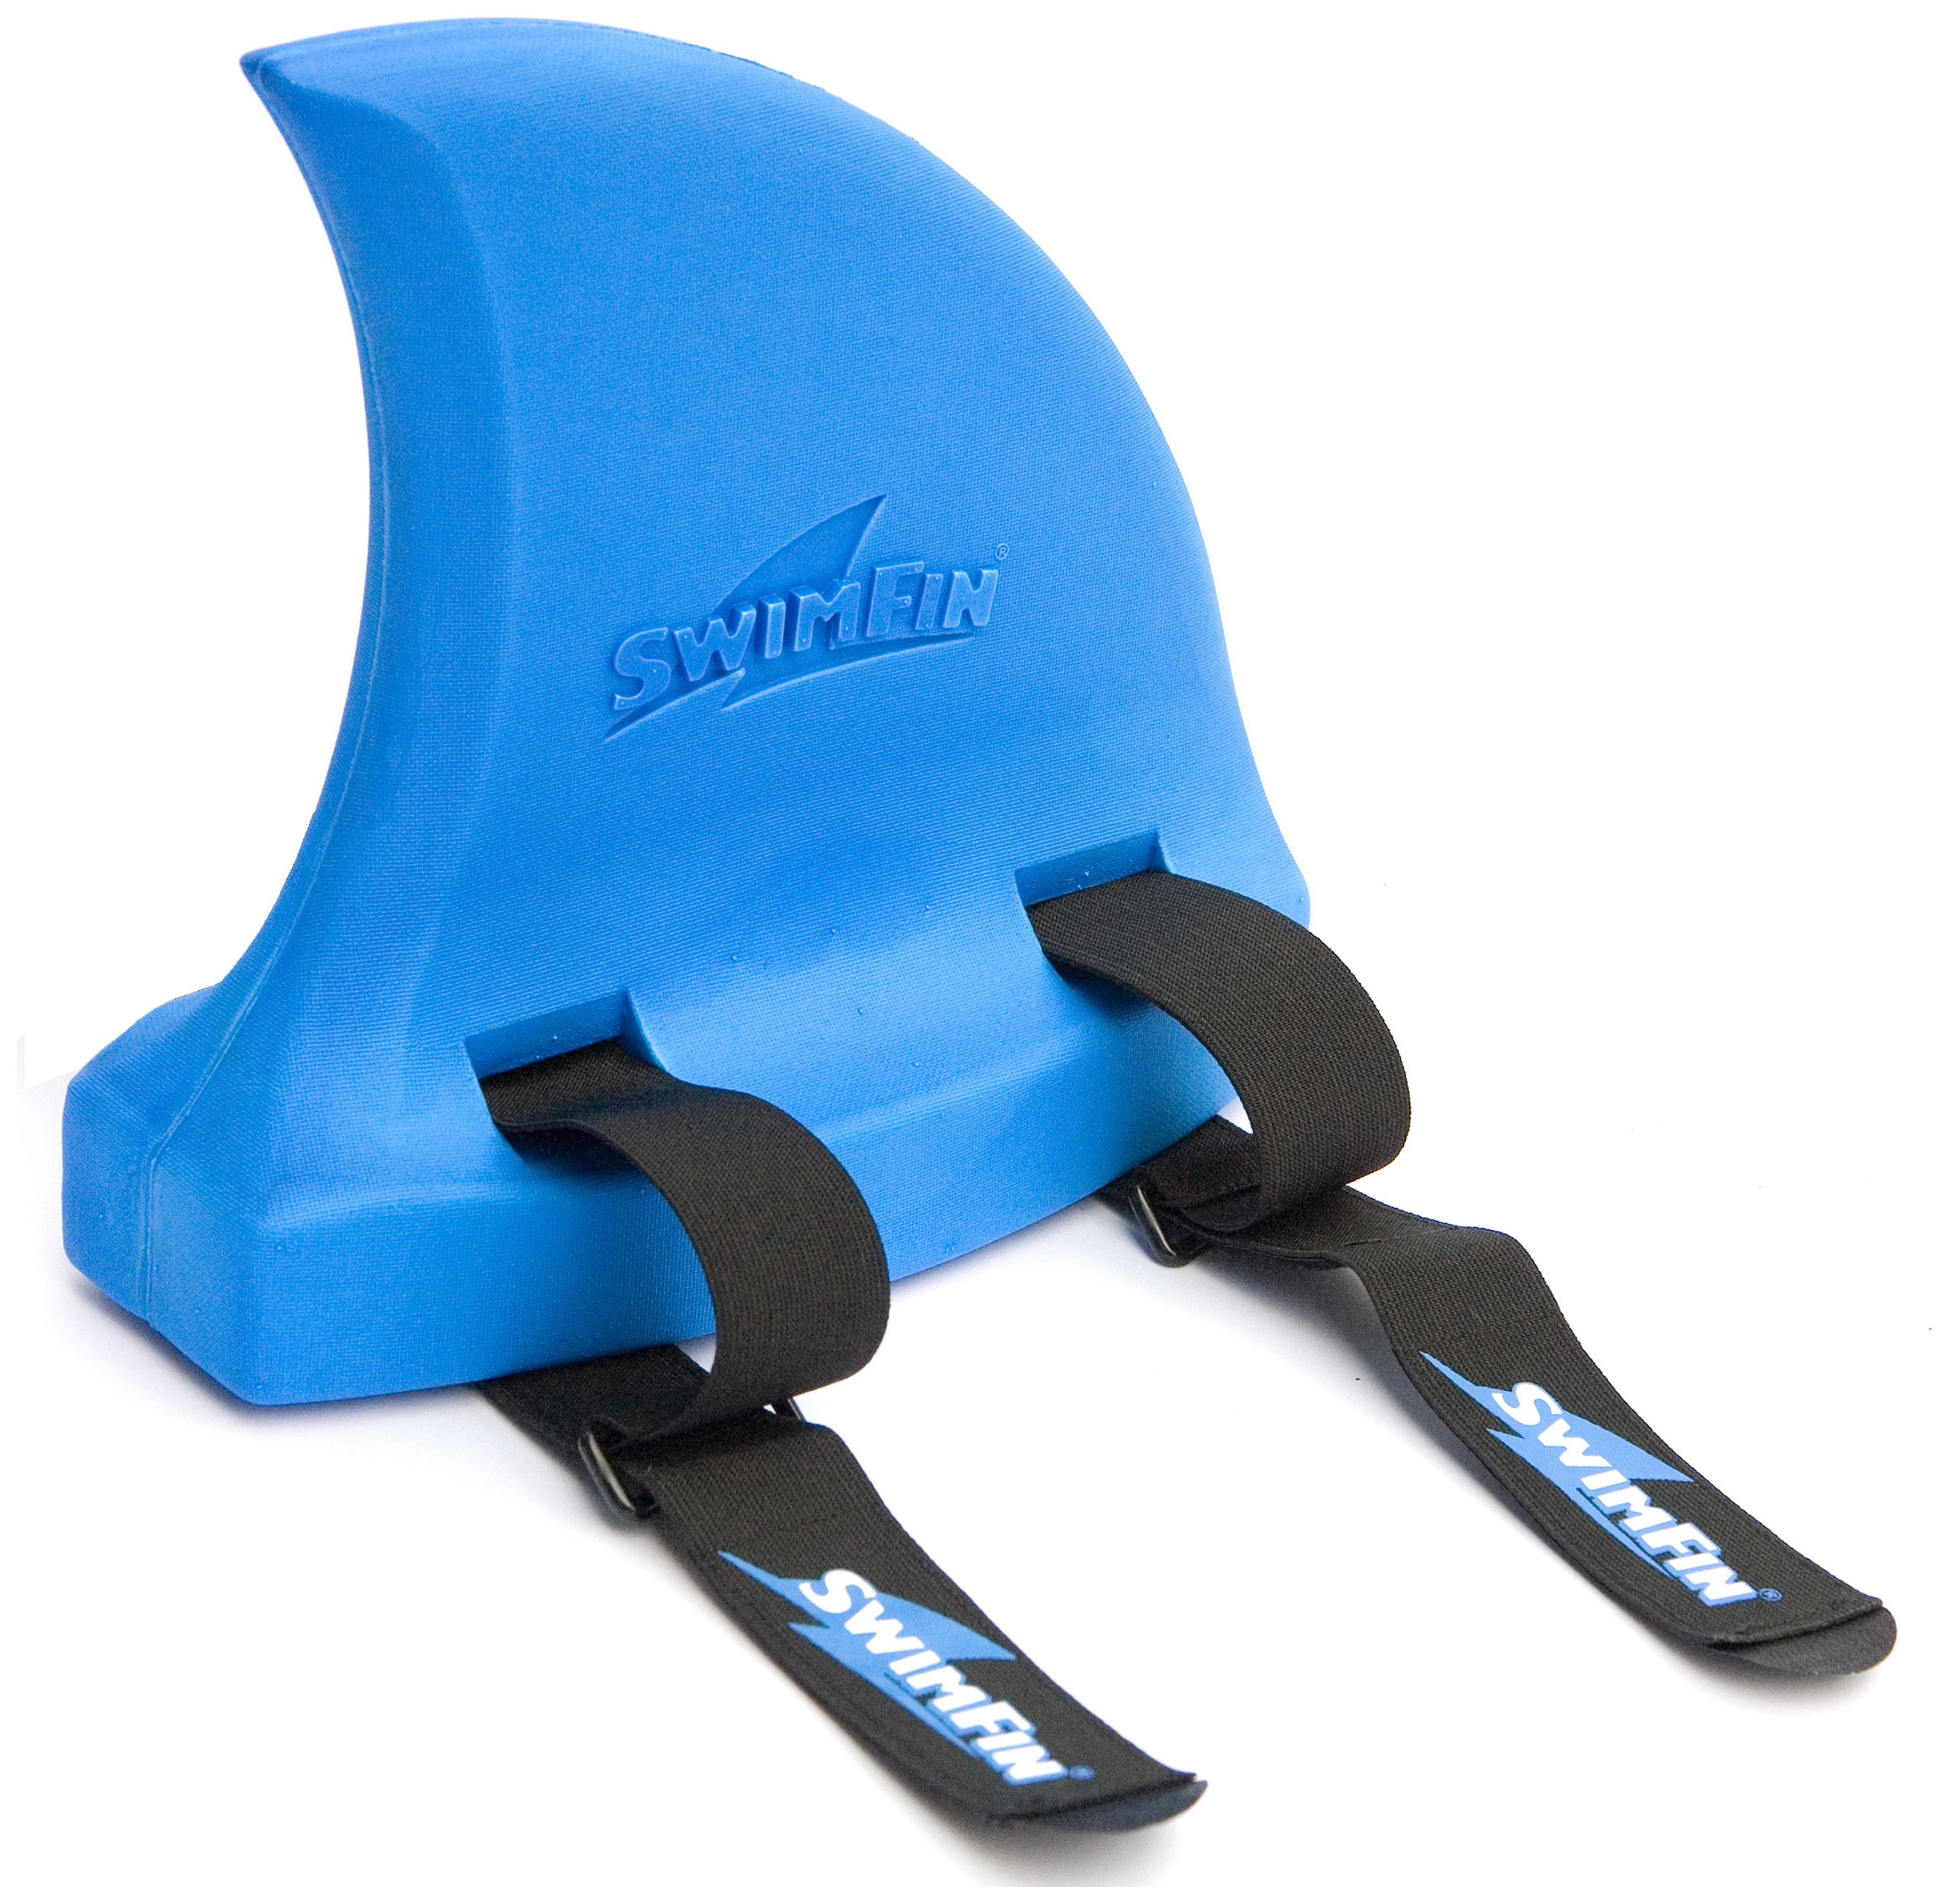 Swimfin Swimming Aid review